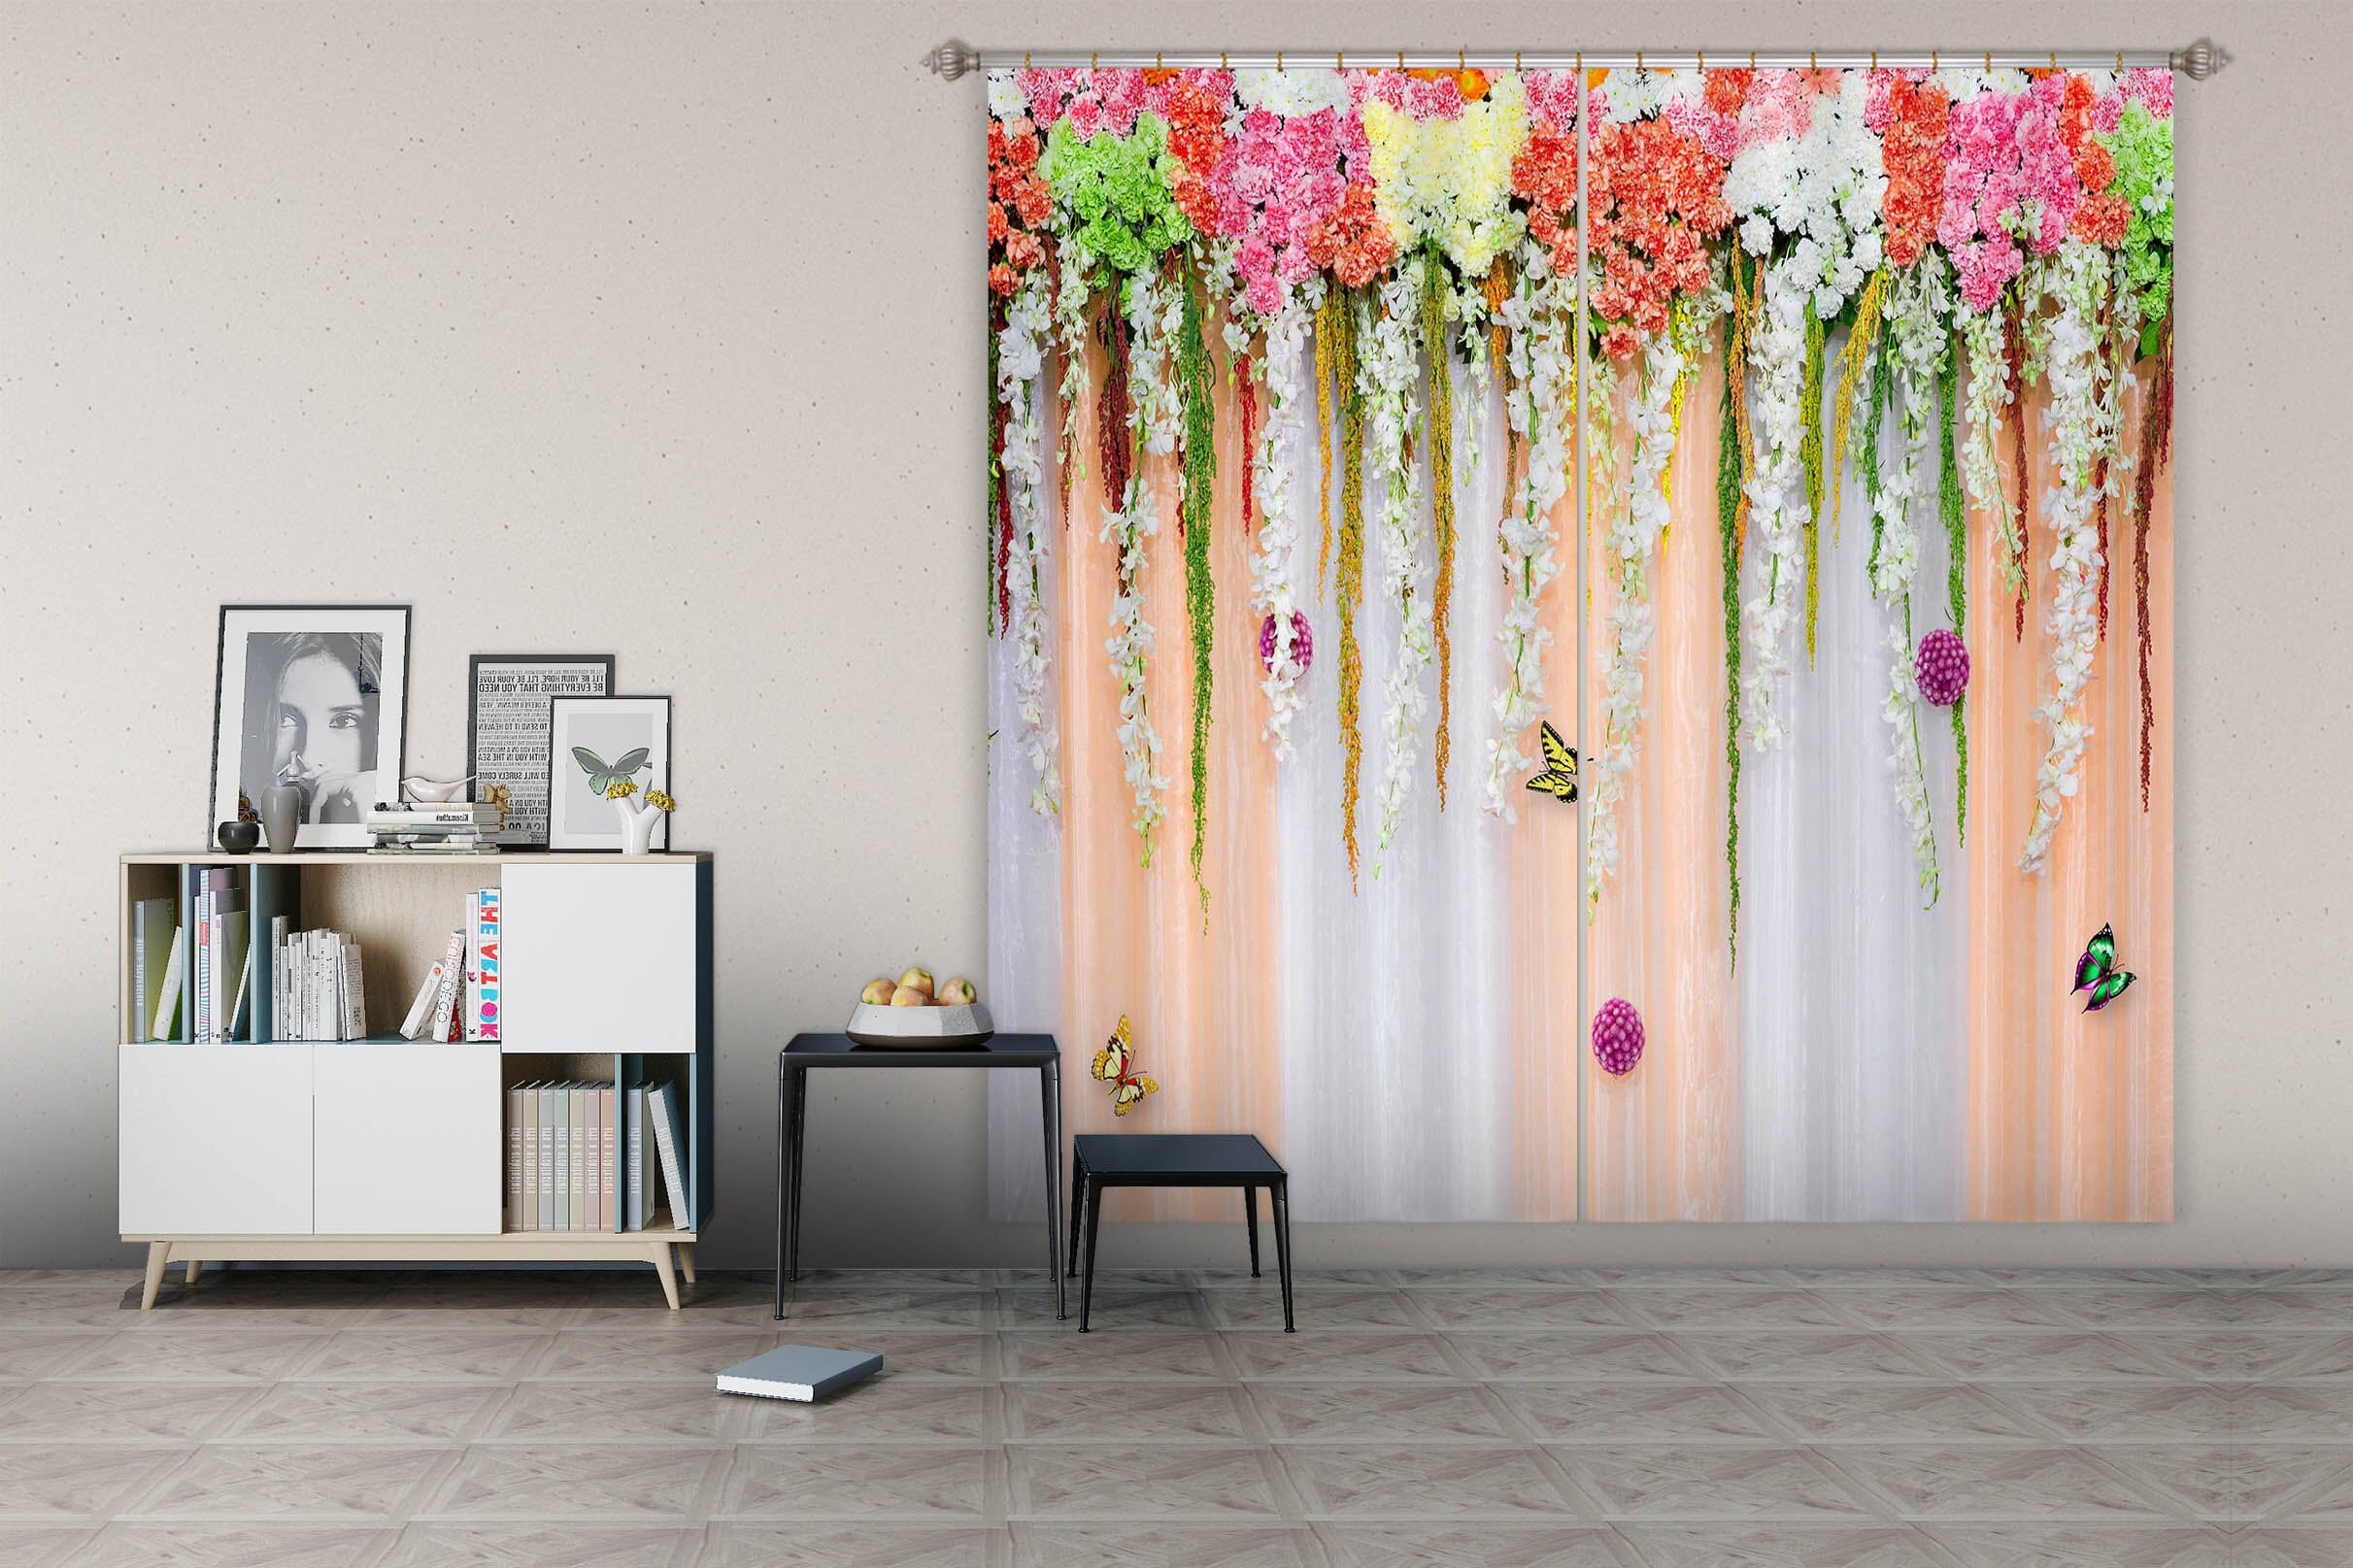 3D Flower Wall 844 Curtains Drapes Wallpaper AJ Wallpaper 